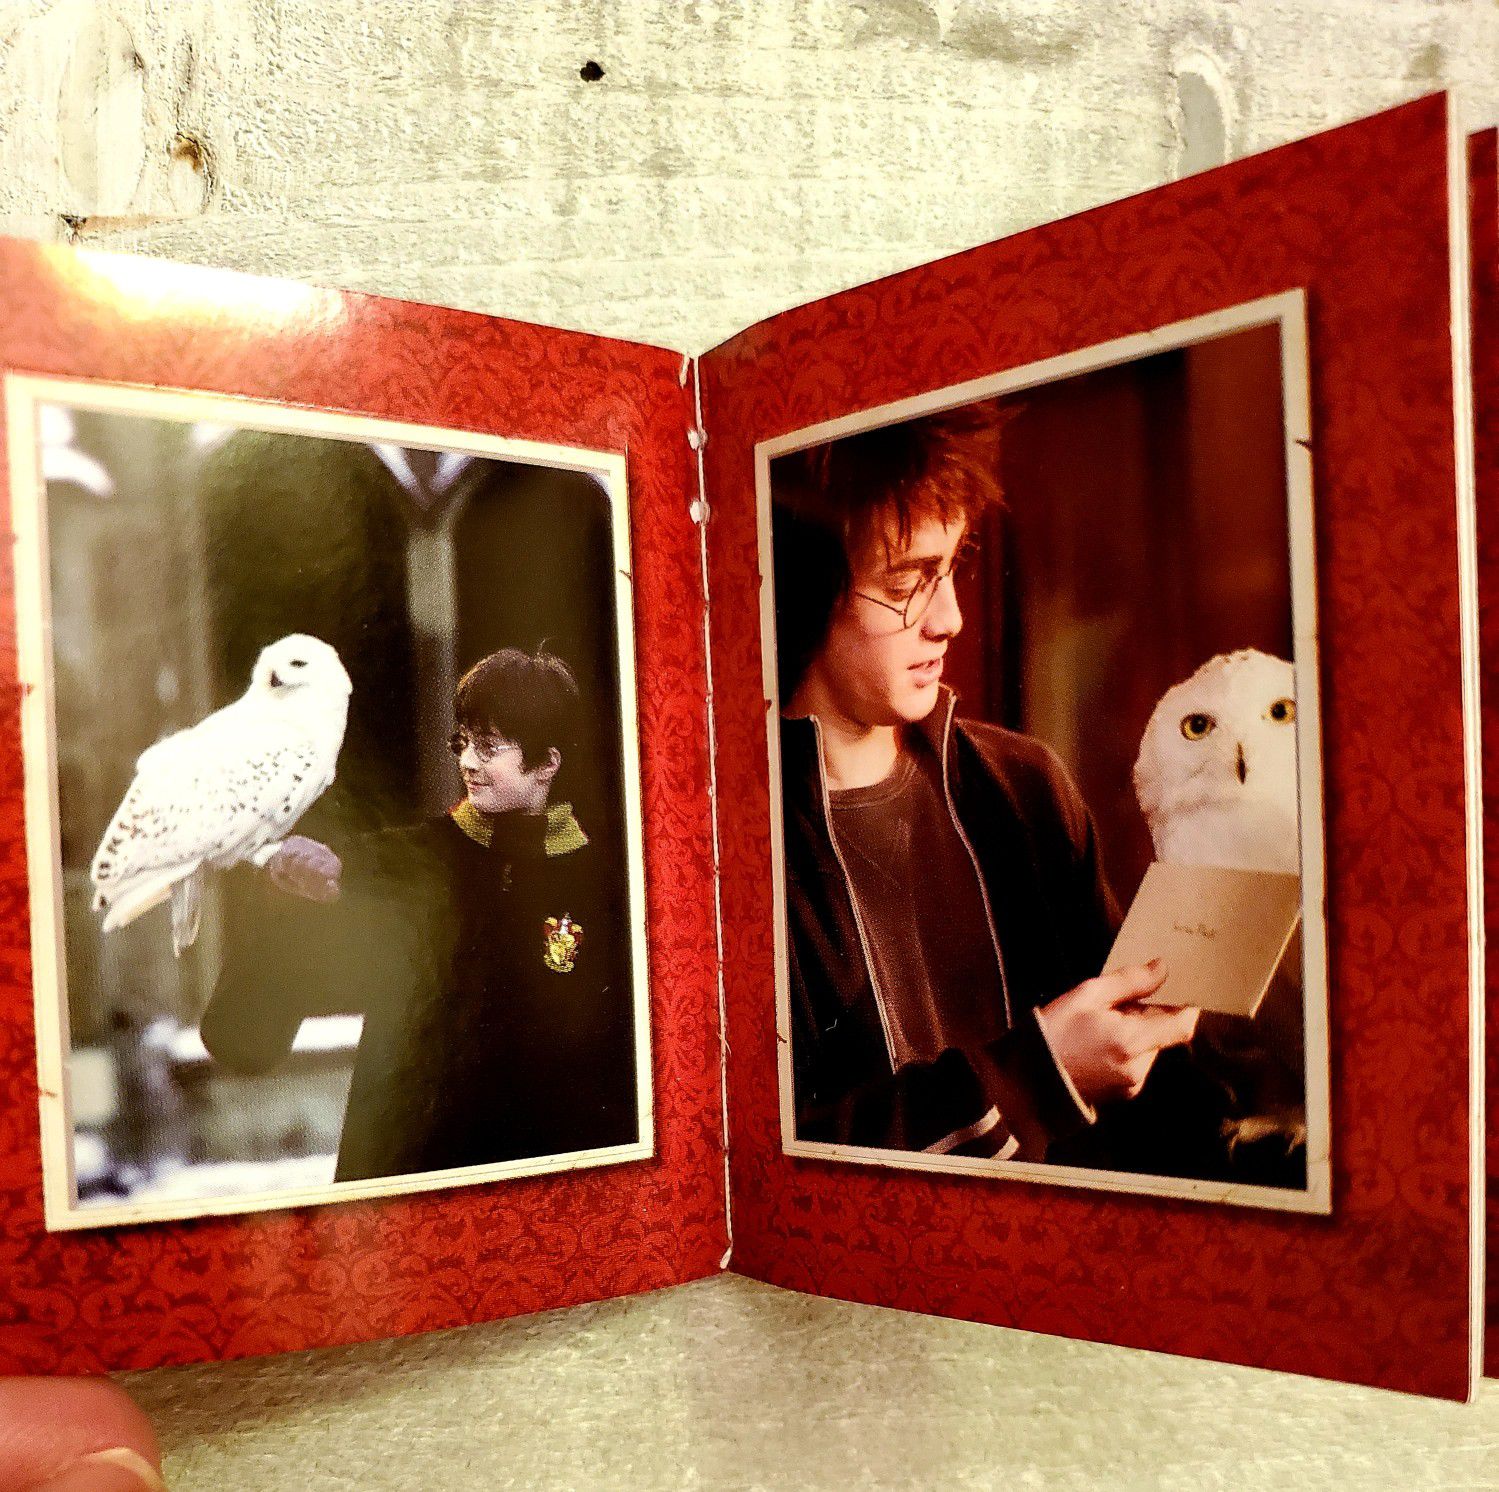 Harry Potter sticker book